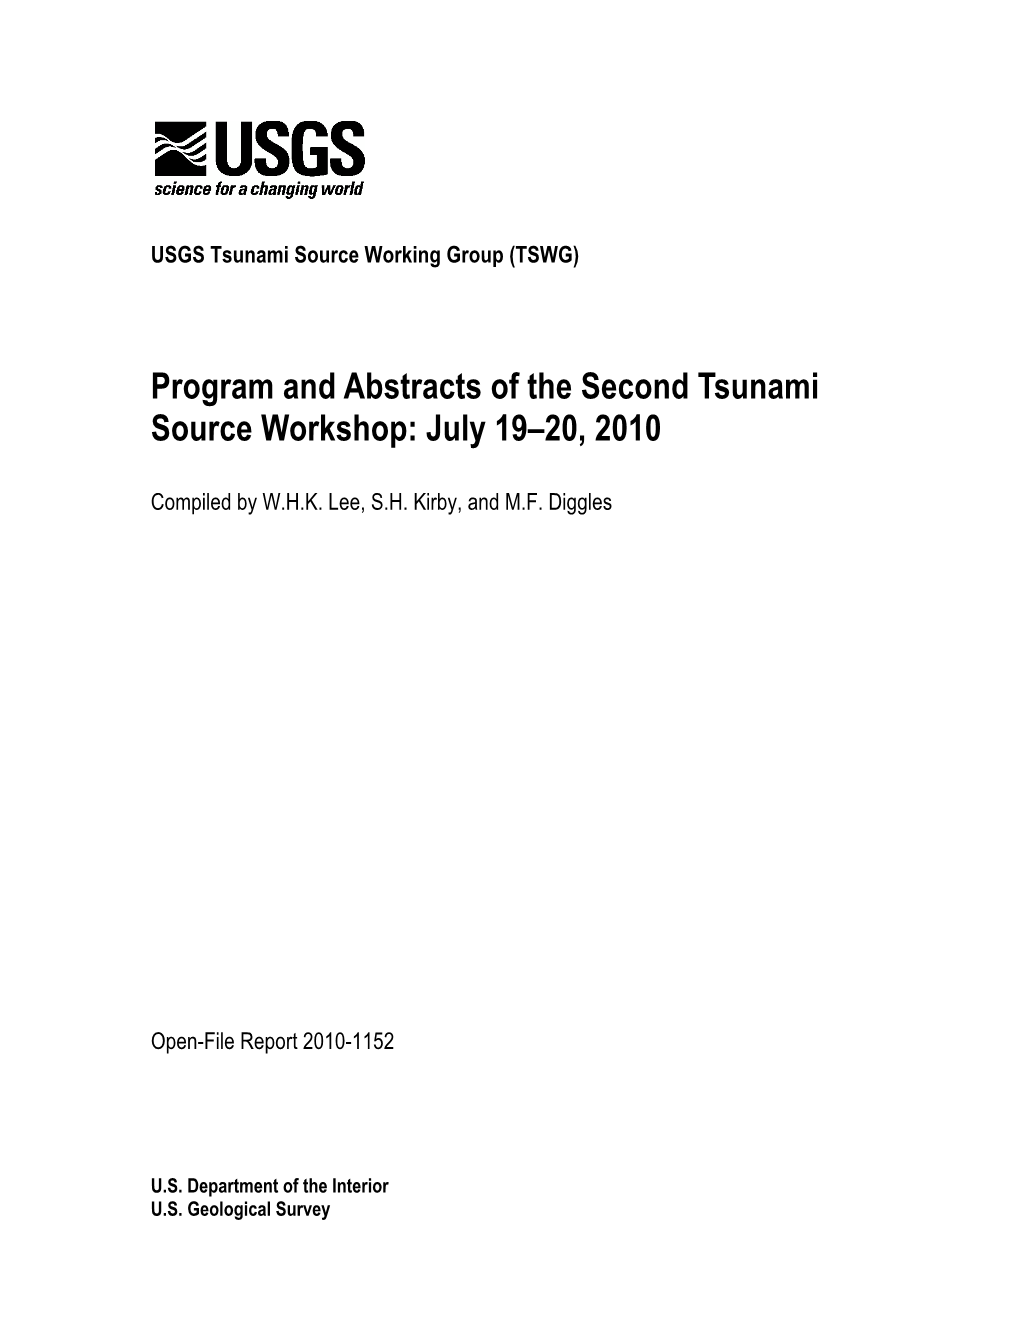 USGS Open-File Report 2010-1152